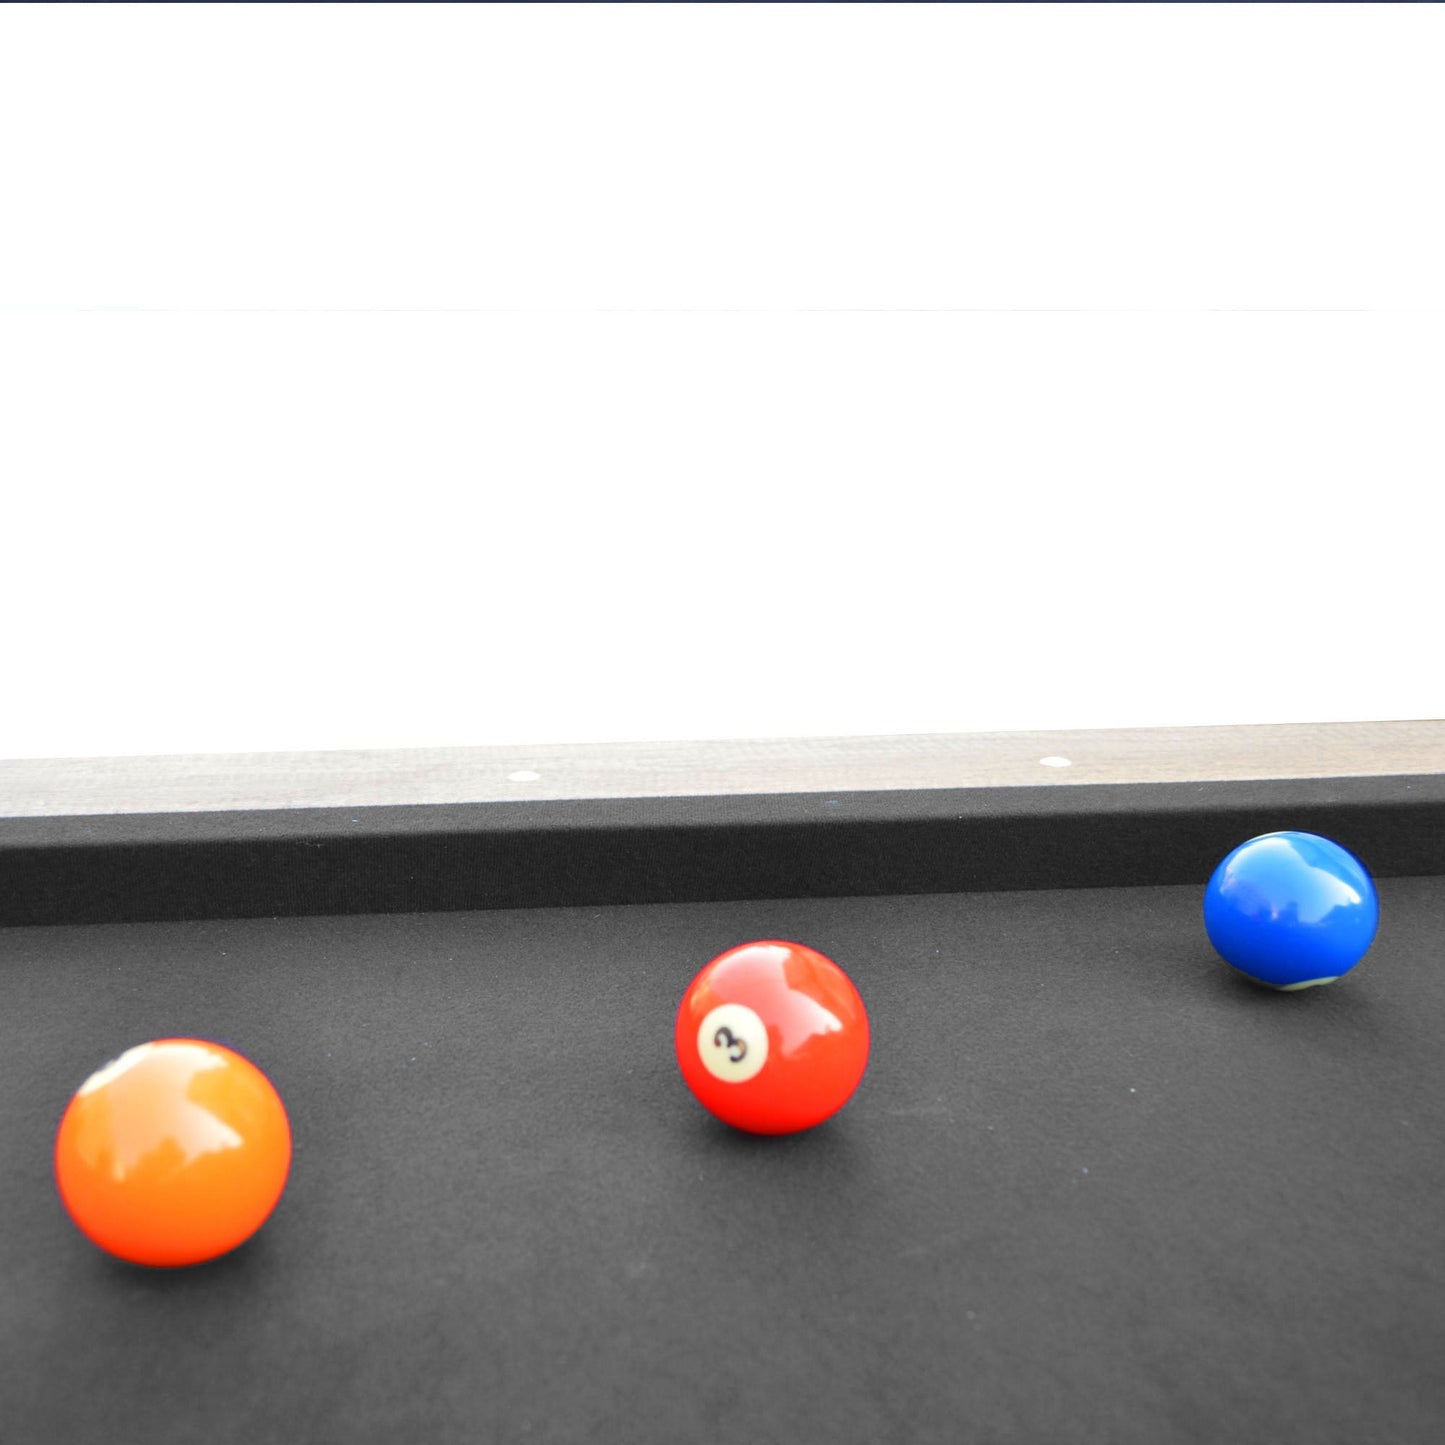 |Viavito PT500 7ft Pool Table - Black - Balls|